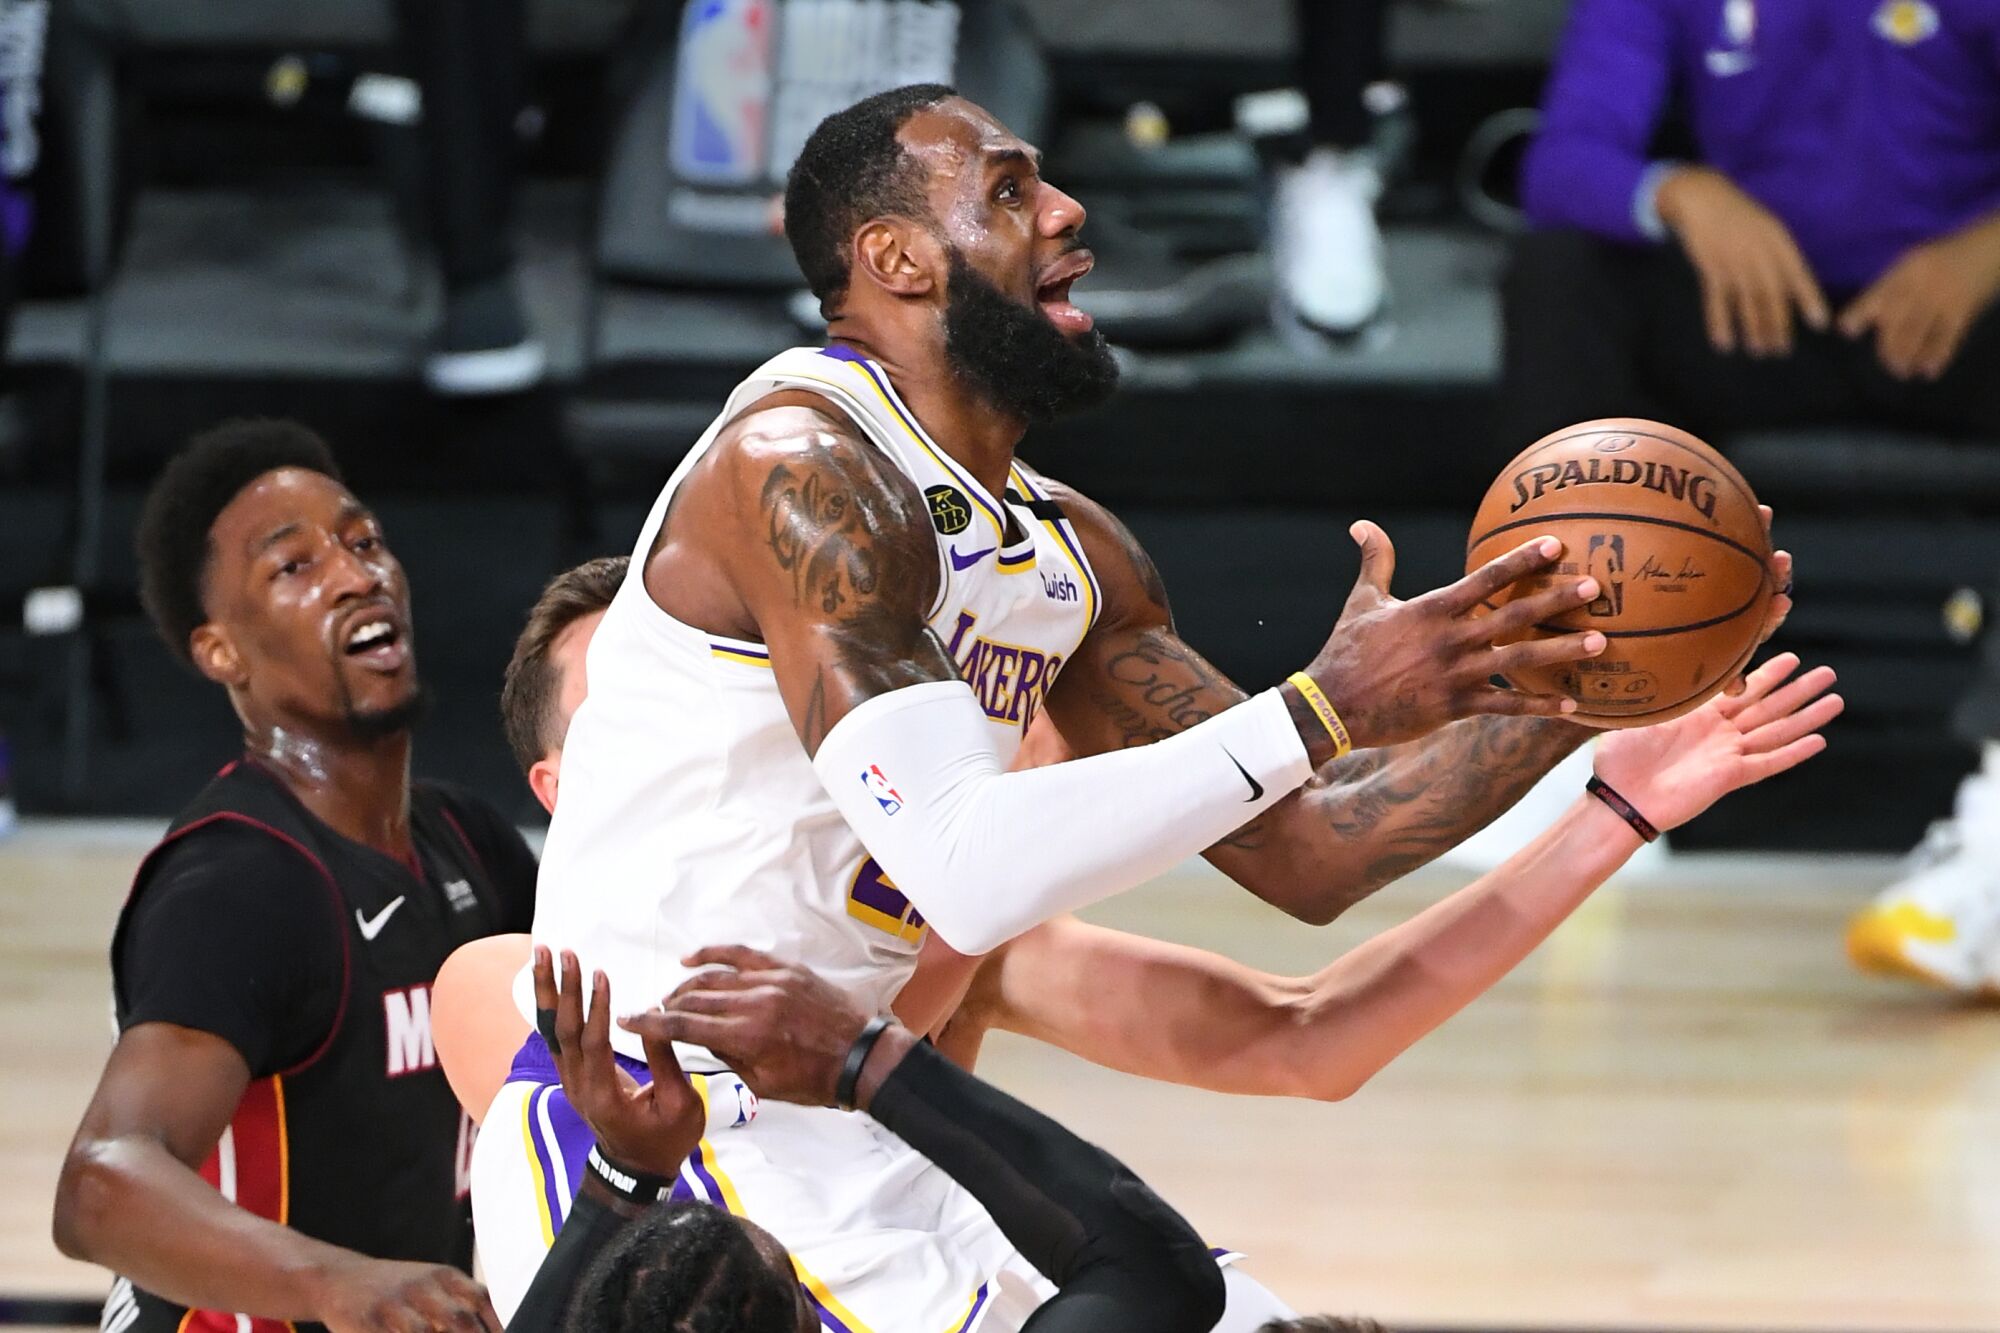 Lakers LeBron James beats the Heat defense top score a basket